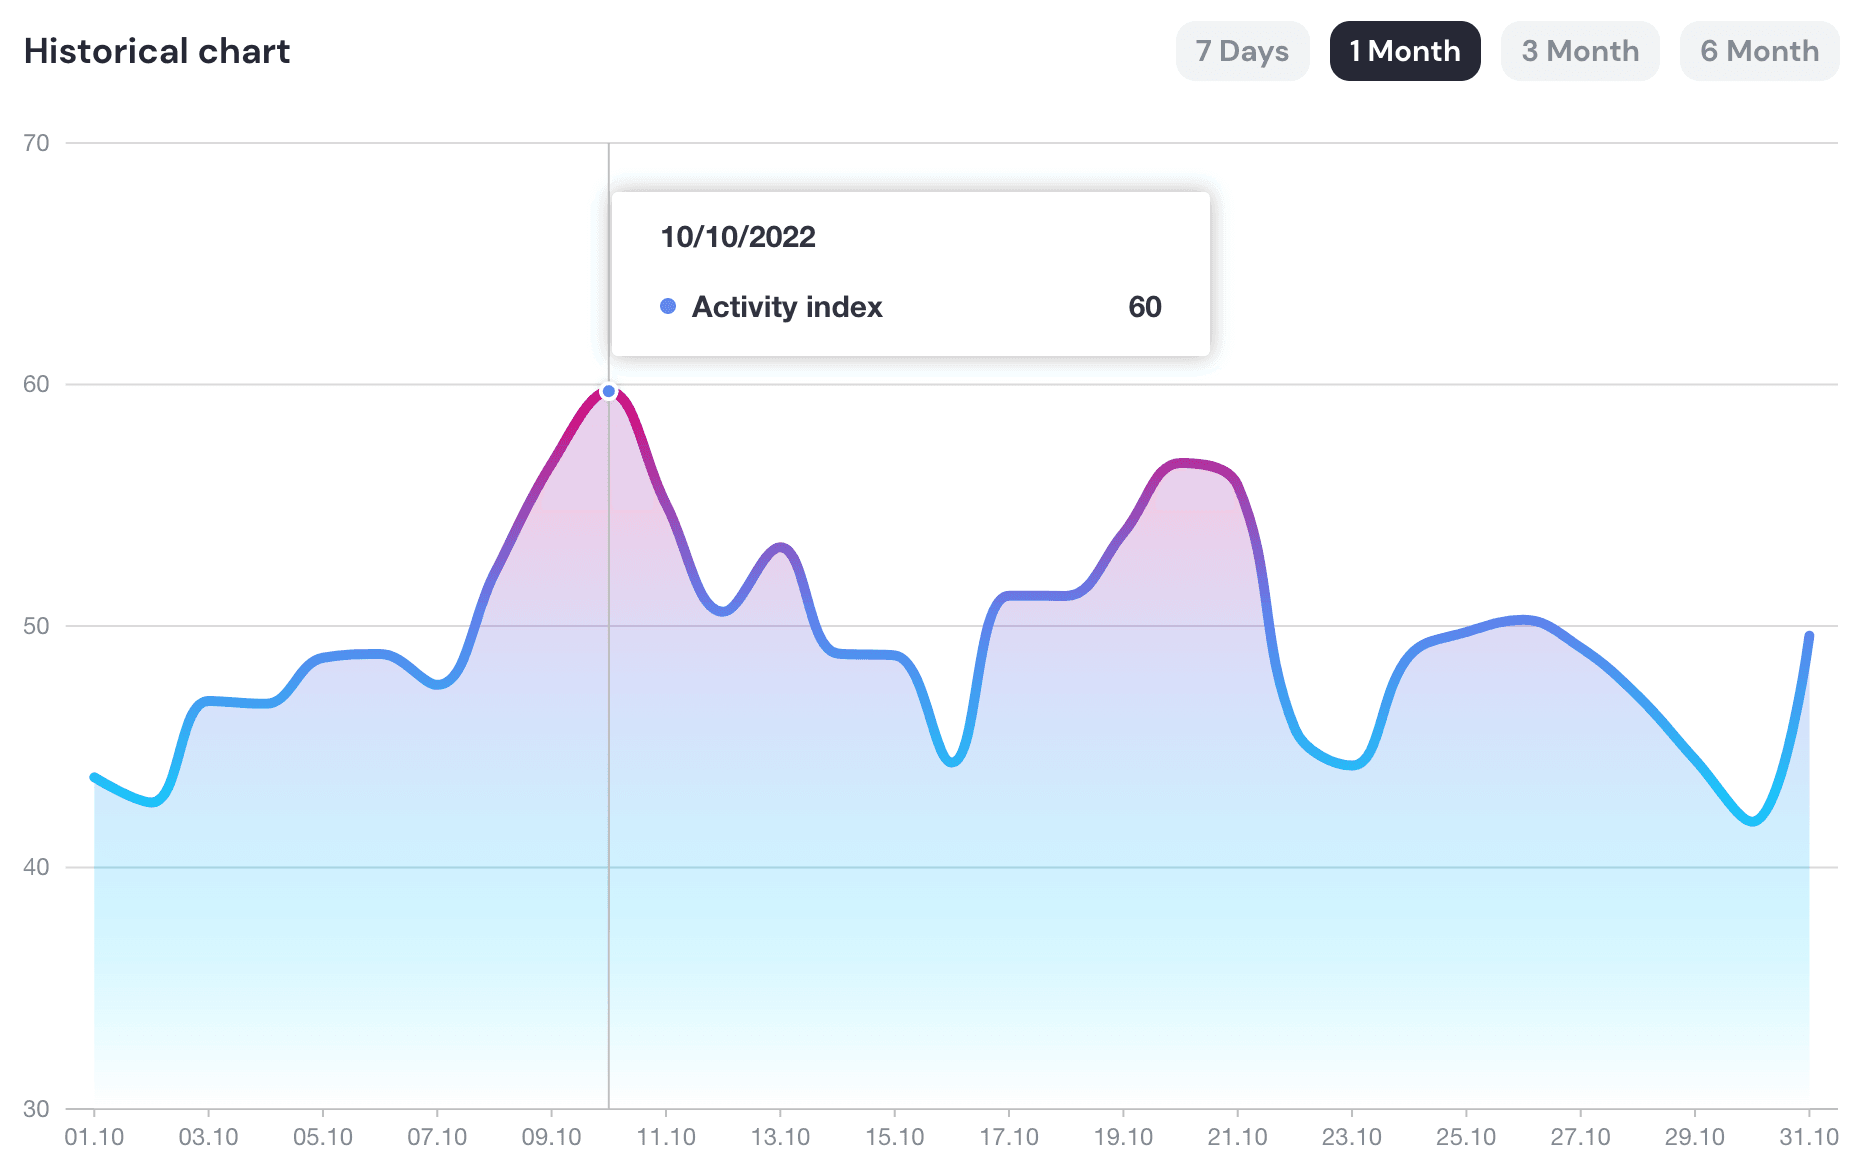 Ethereum activity index in October